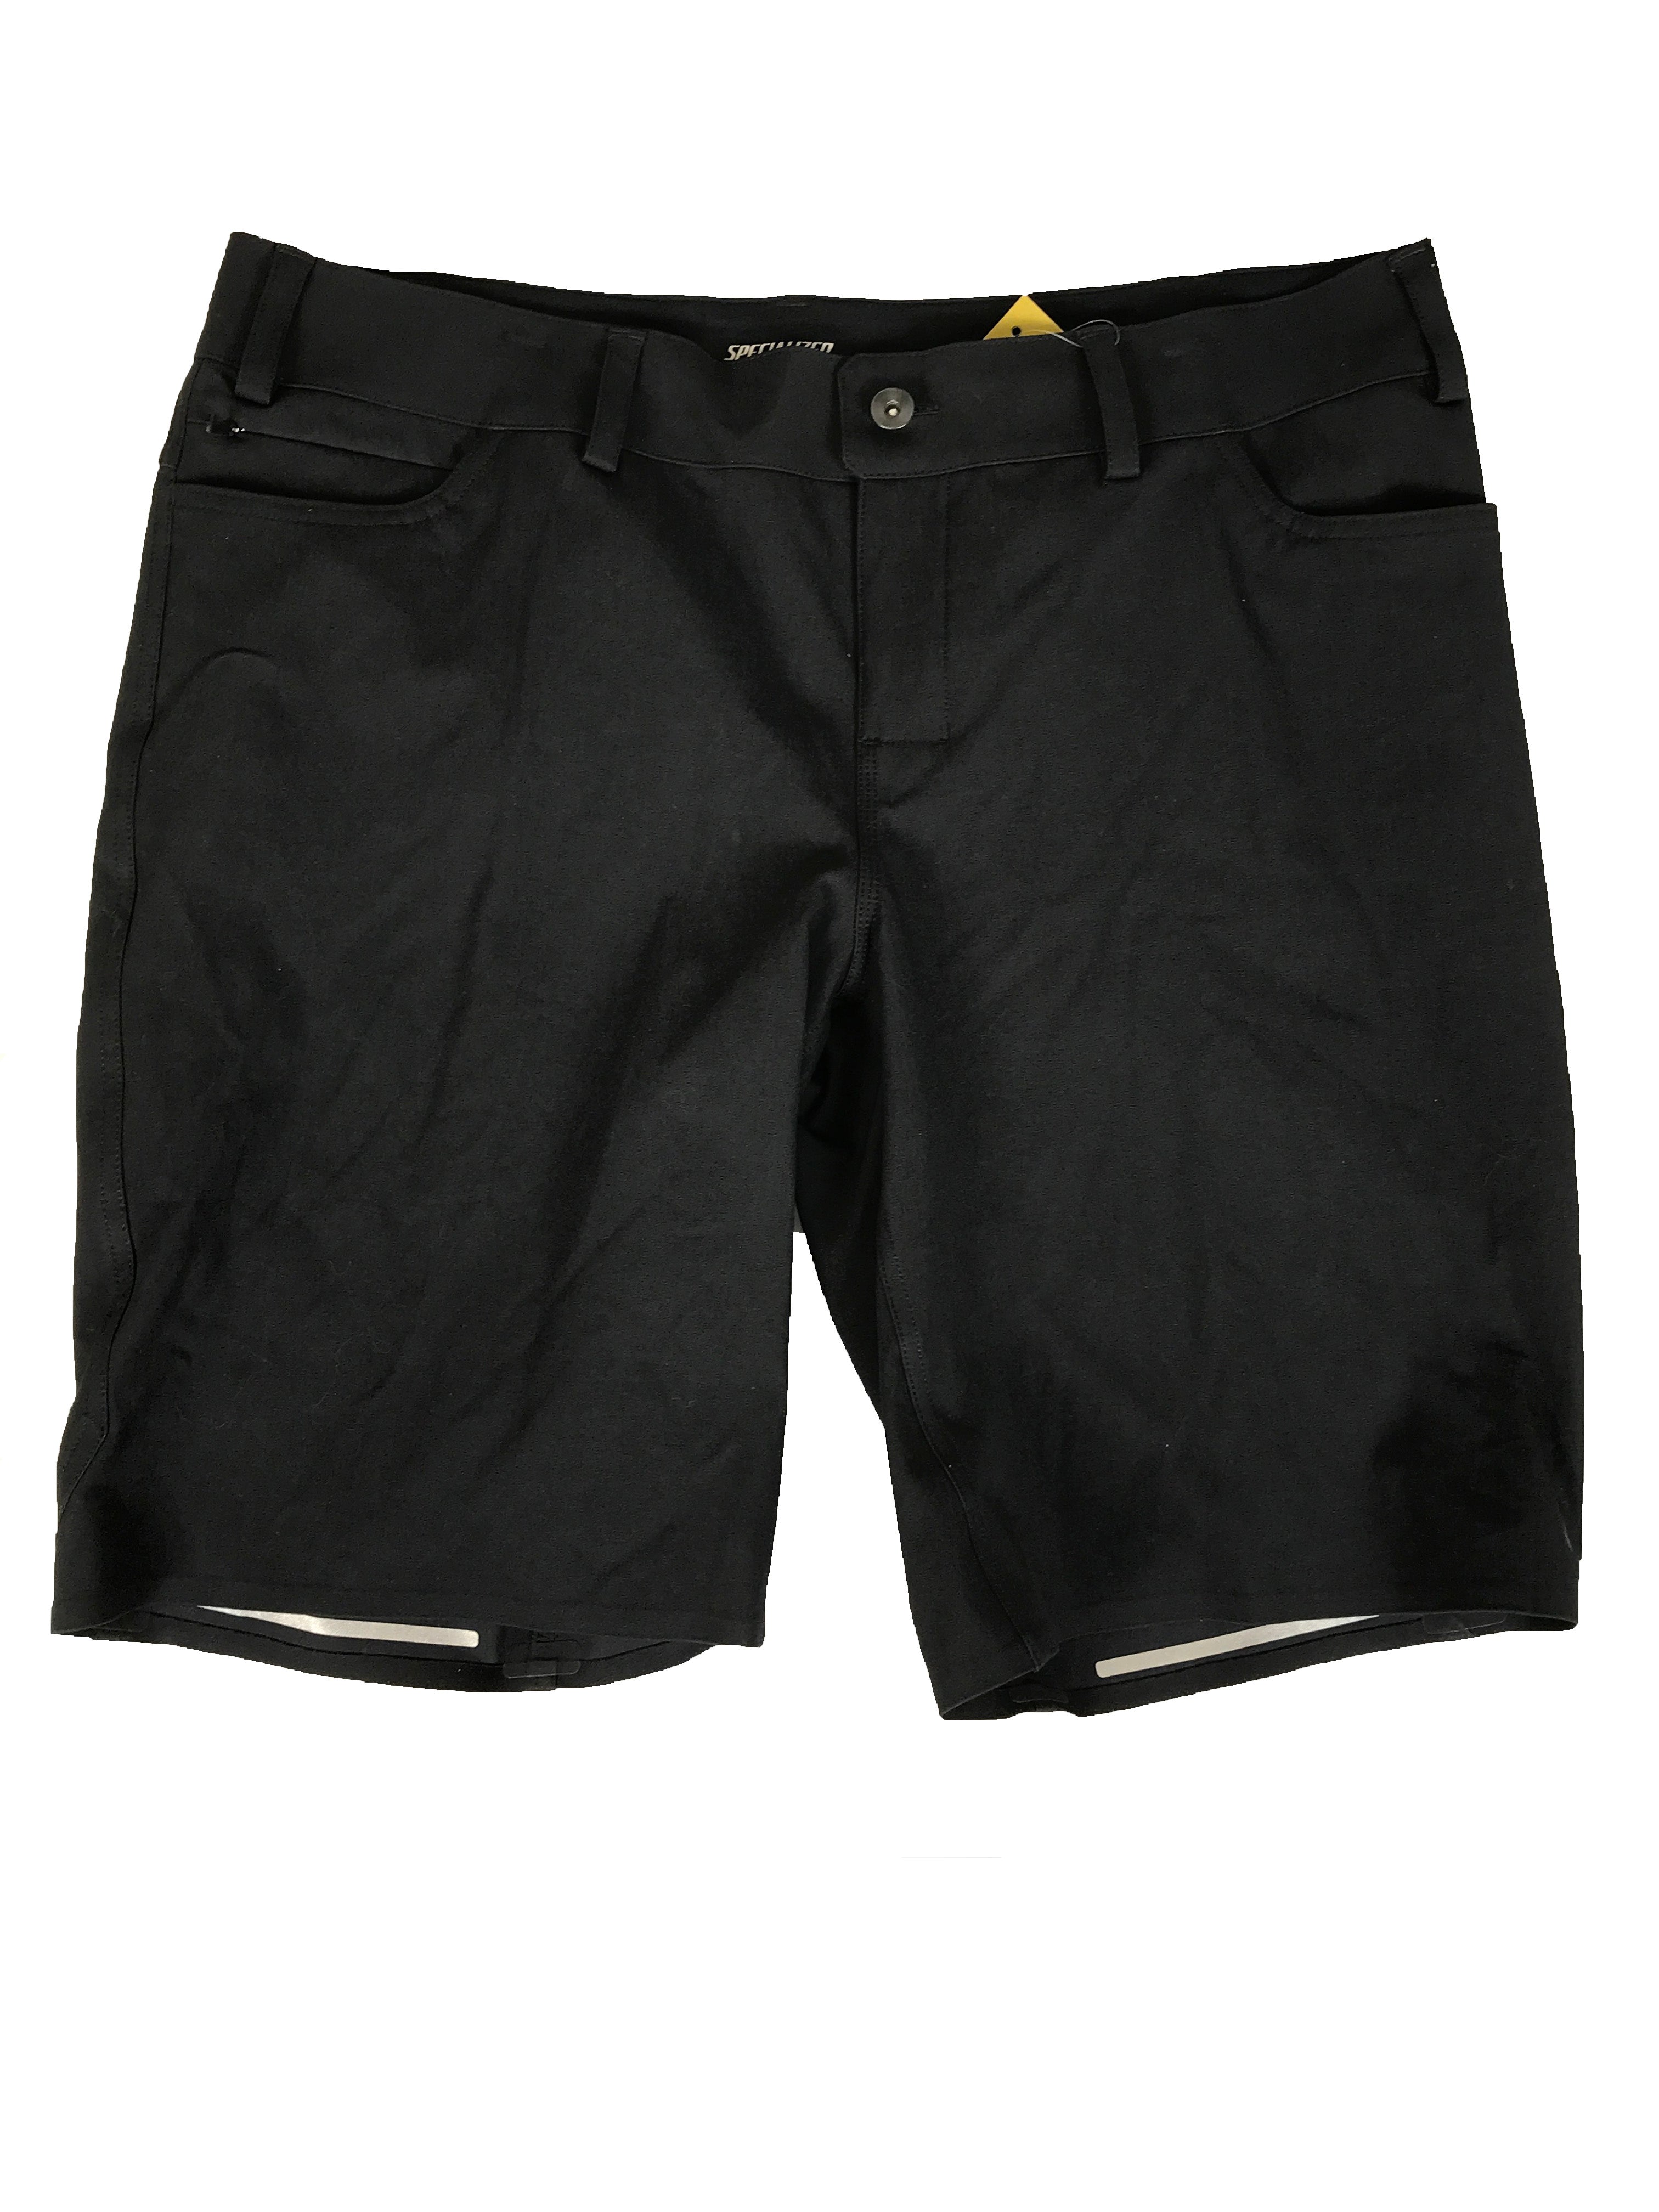 Specialized RBX ADV Black Shorts Men's Size 38 NWT